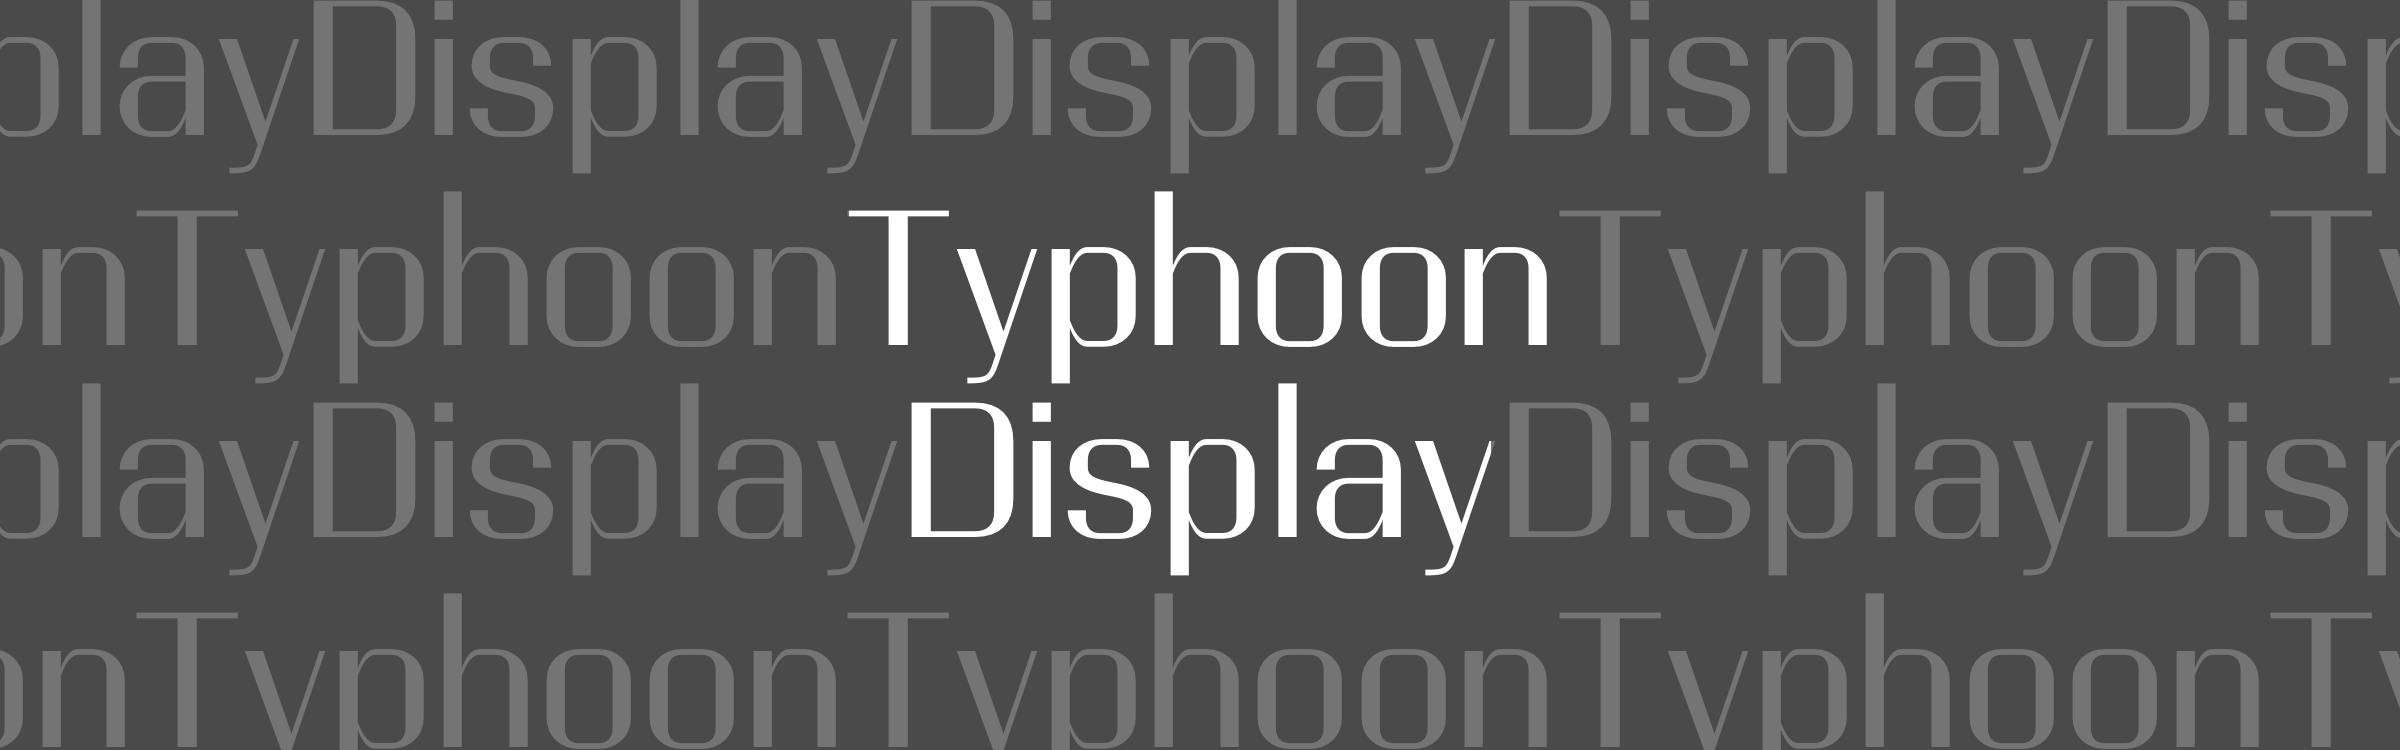 Free Typeface: Typhoon Display Regular